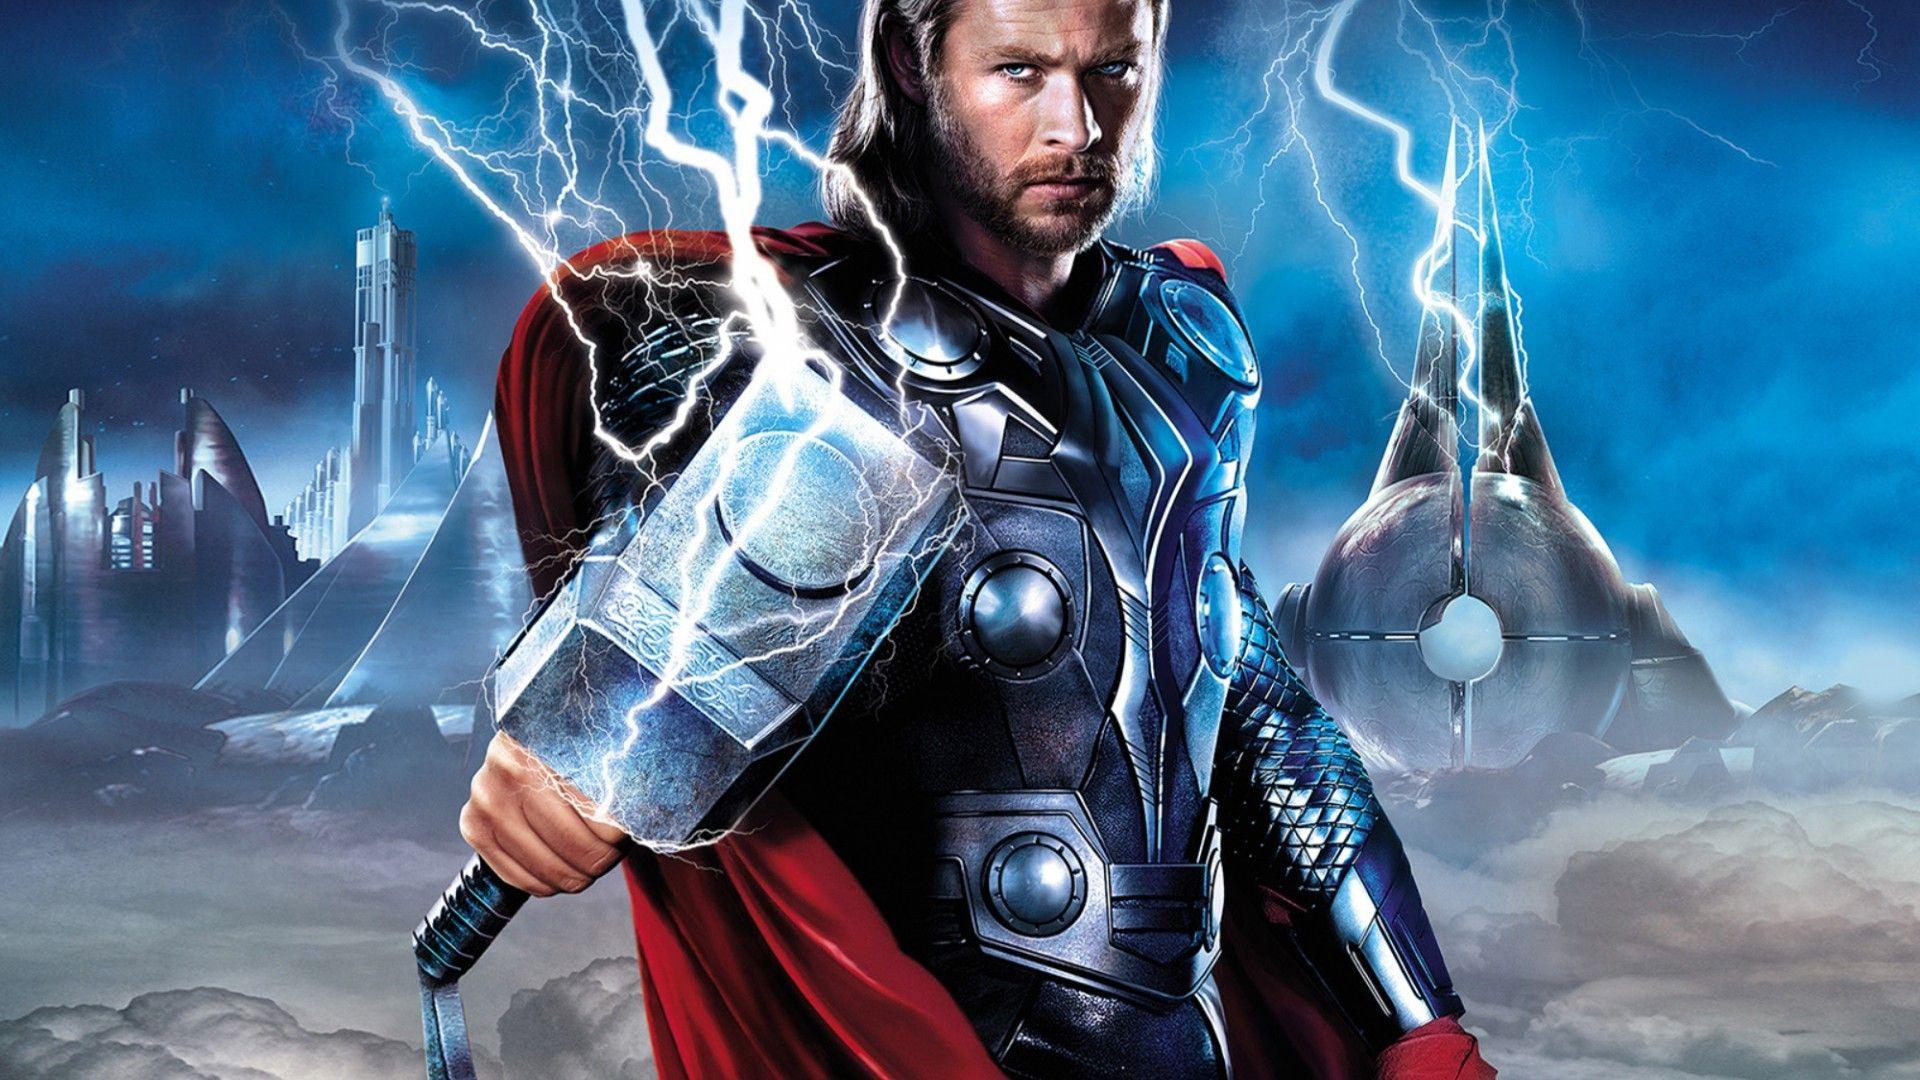 Thor Hammer Avengers HD Wallpaper, Background Image